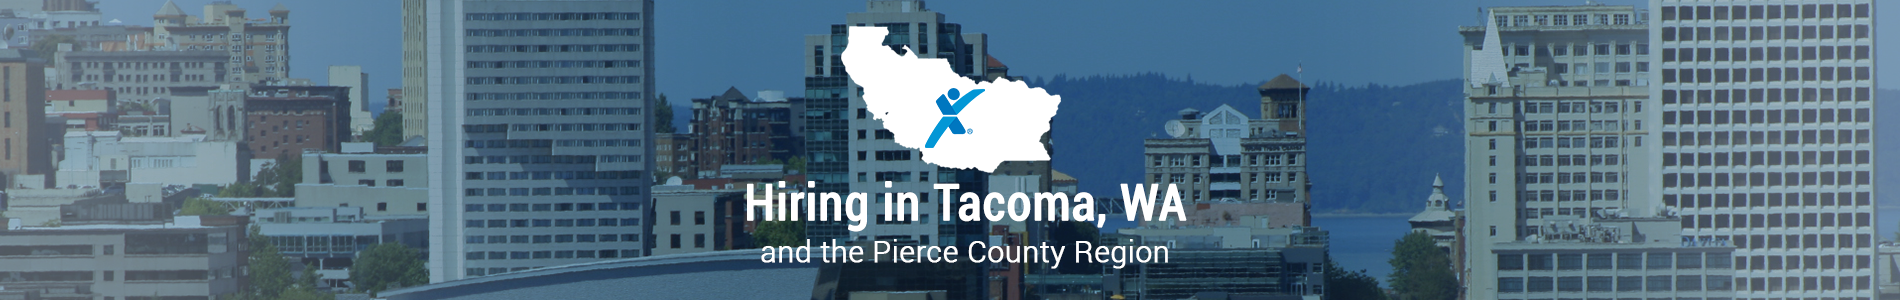 Local tacoma jobs description about job